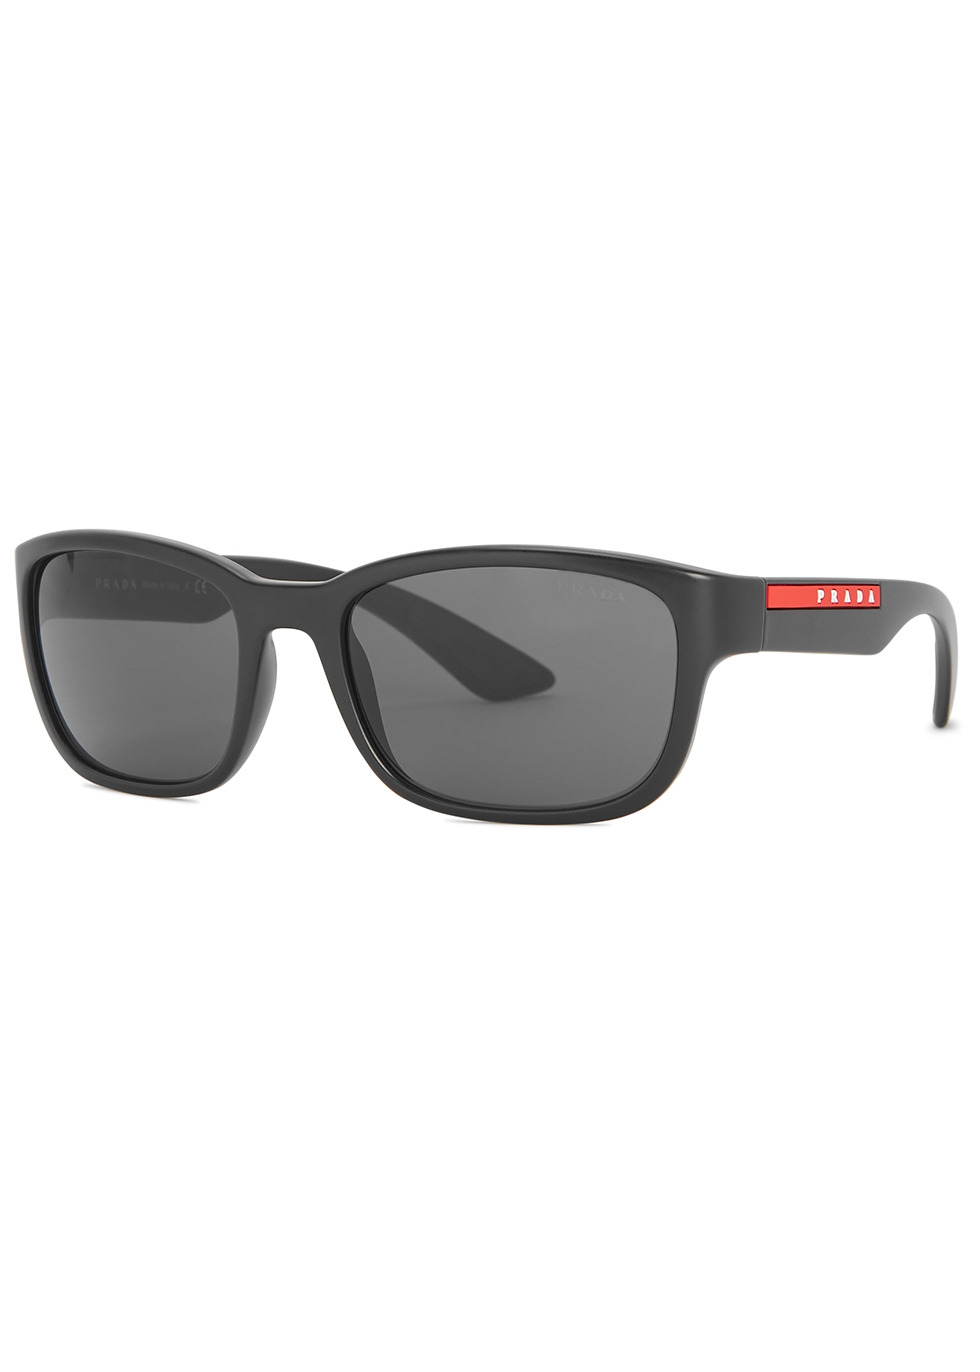 prada sunglasses wayfarer style, OFF 78 